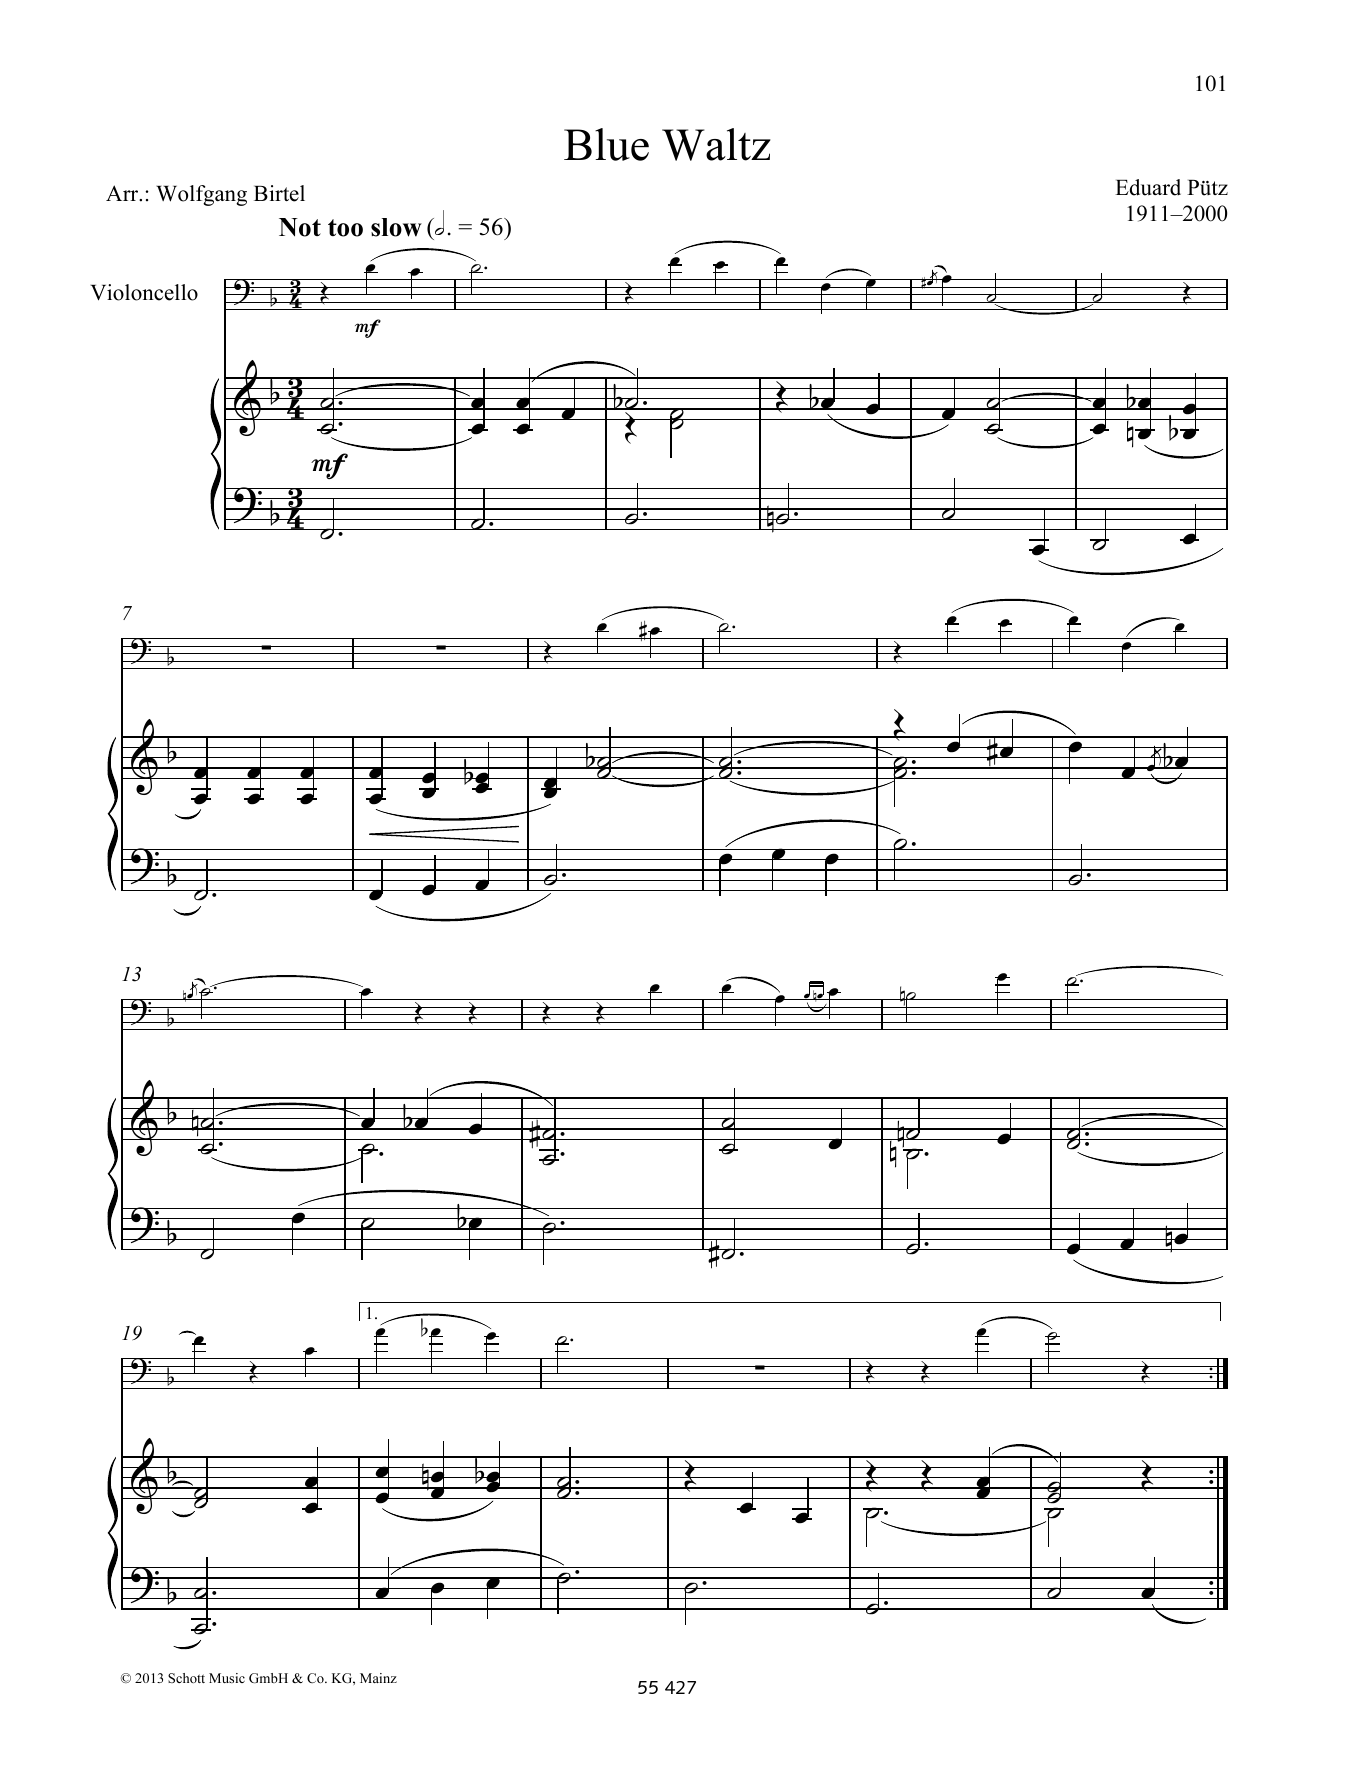 Eduard Pütz Blue Waltz Sheet Music Notes & Chords for String Solo - Download or Print PDF